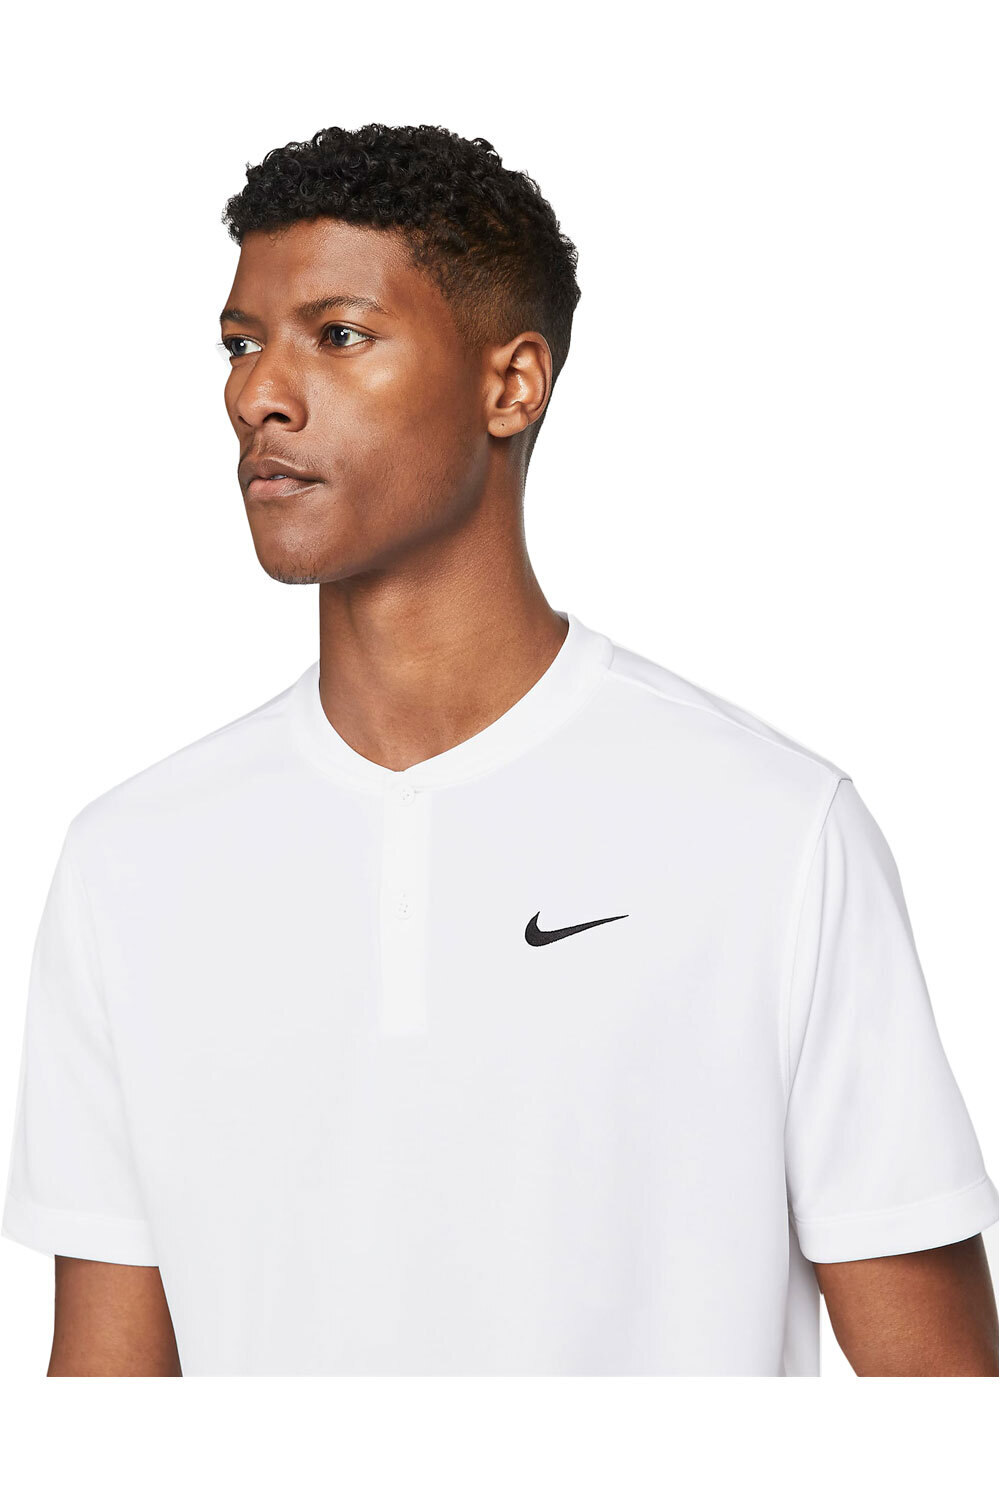 Nike camiseta tenis manga corta hombre M NKCT DF POLO BLADE SOLID vista trasera